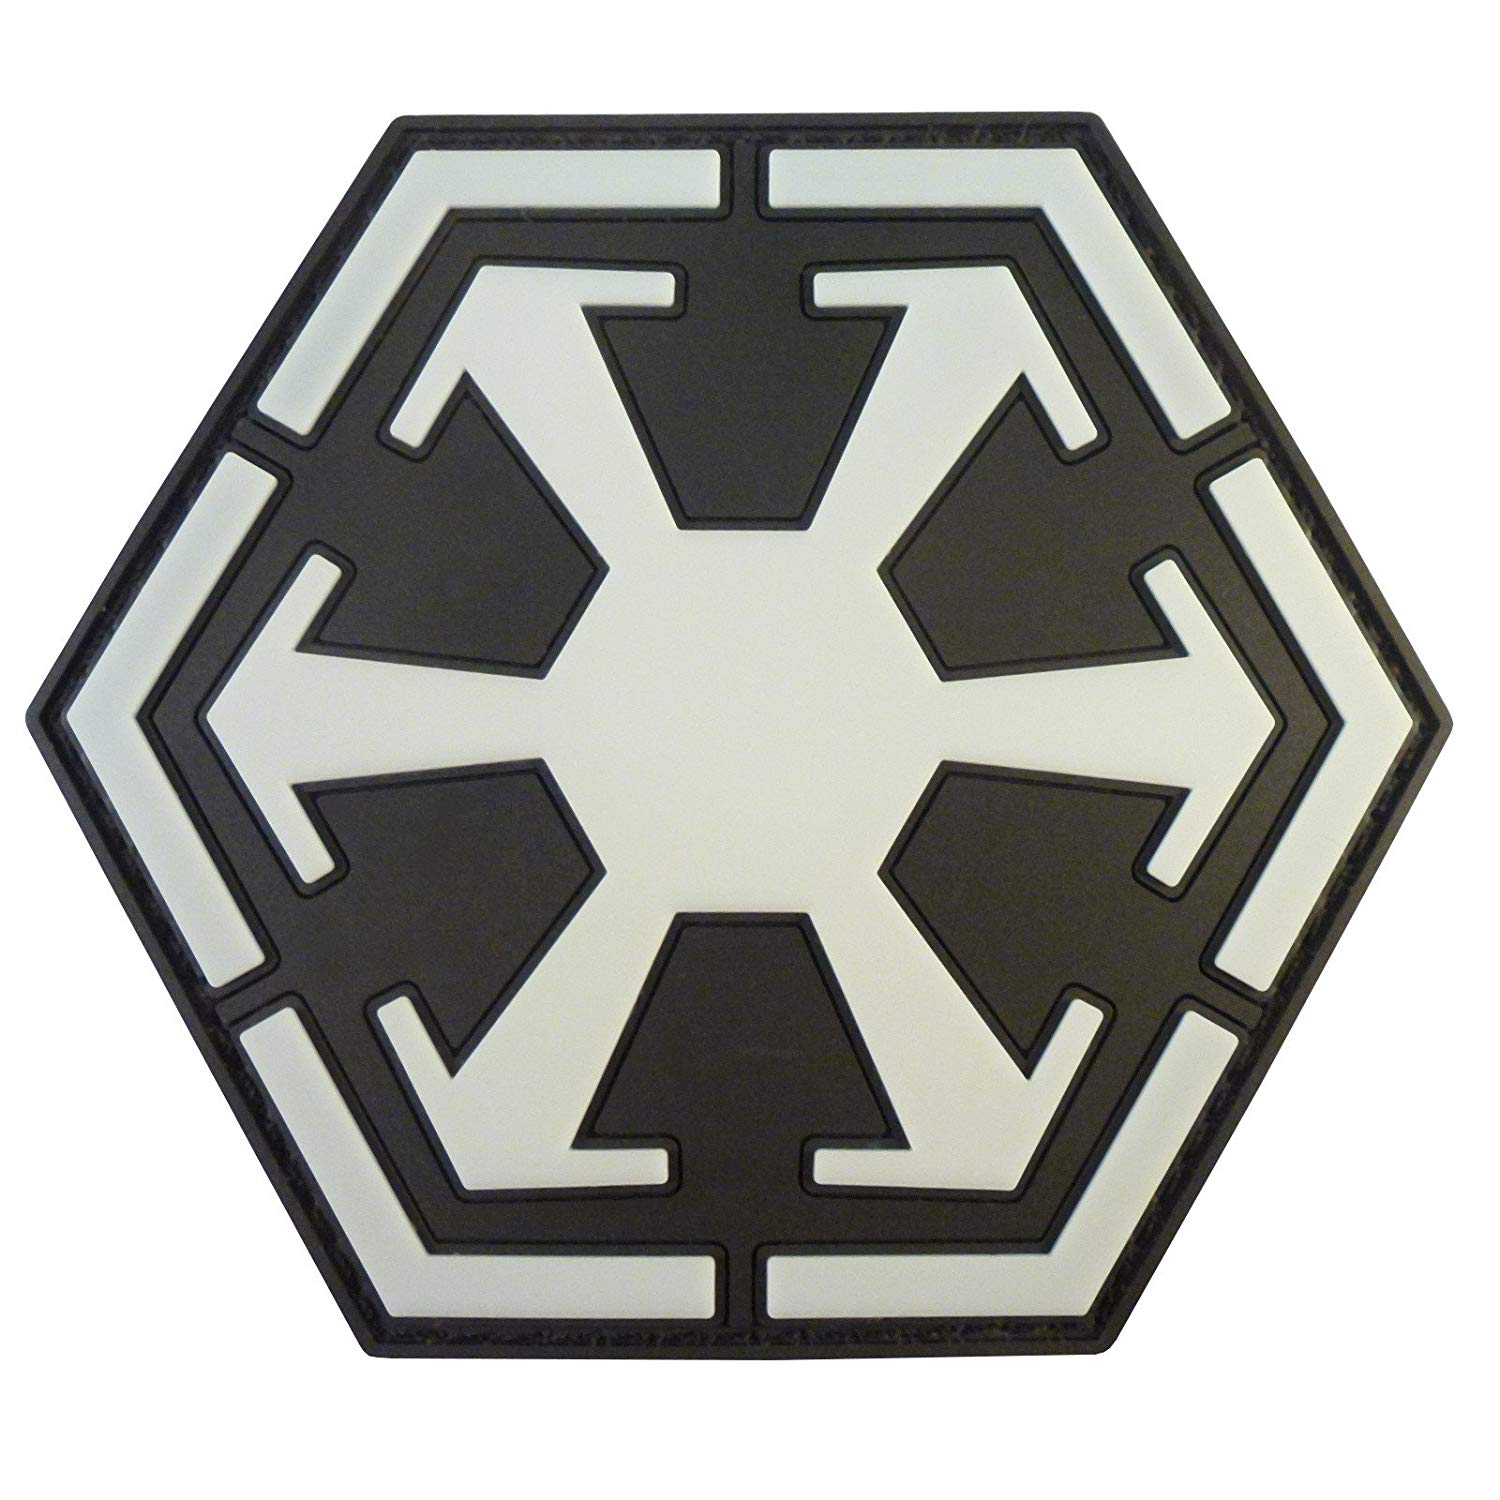 Sith Logo - Amazon.com : Star Wars Sith Empire Logo Old Republic PVC Rubber 3D